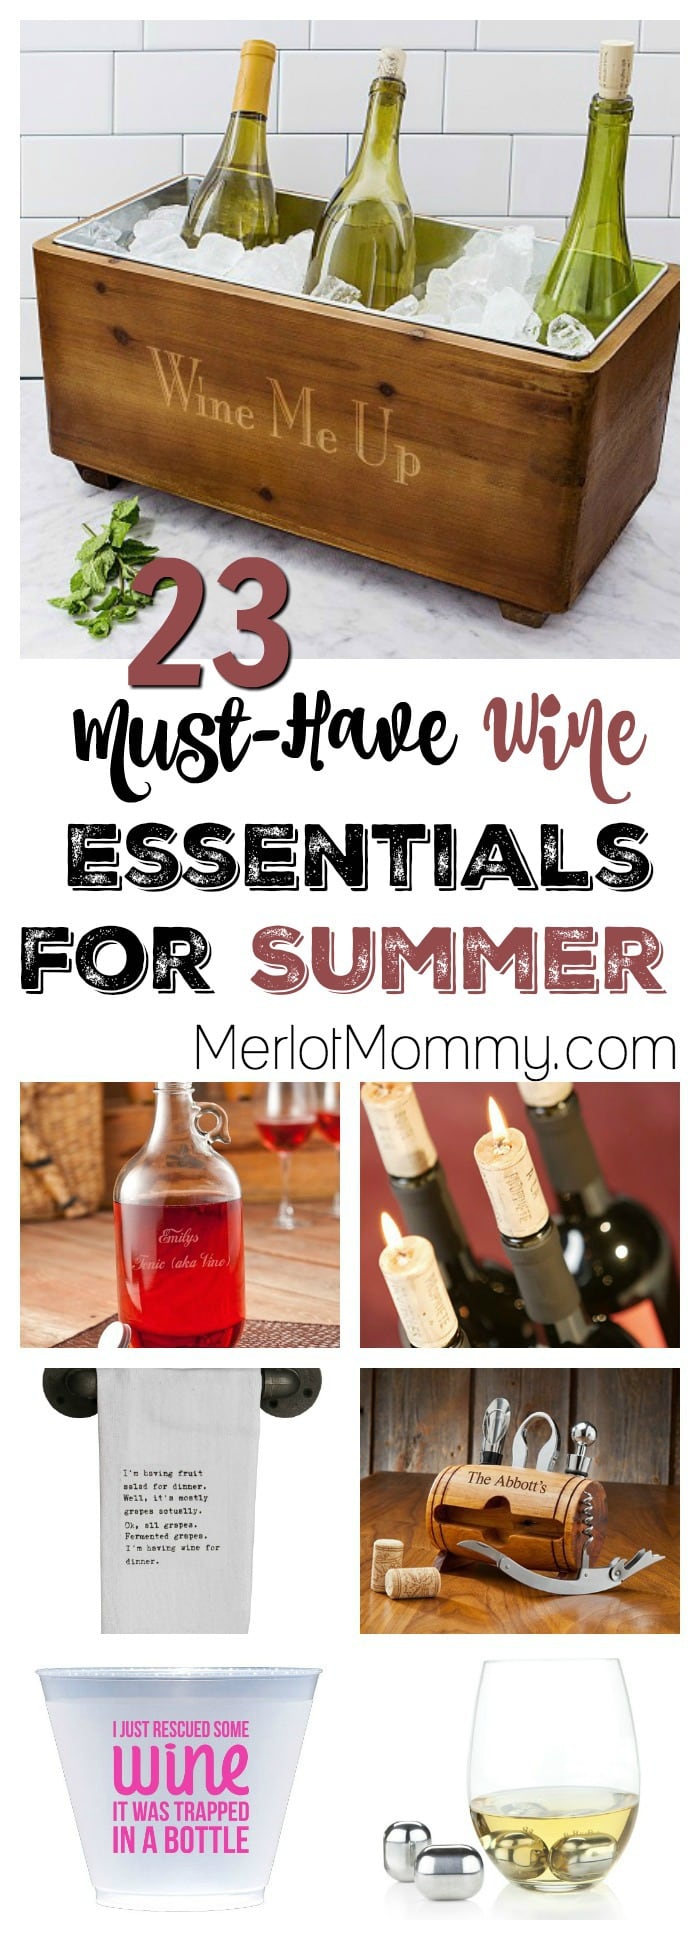 https://merlotmommy.com/wp-content/uploads/2016/06/wine-essentials-pin.jpg